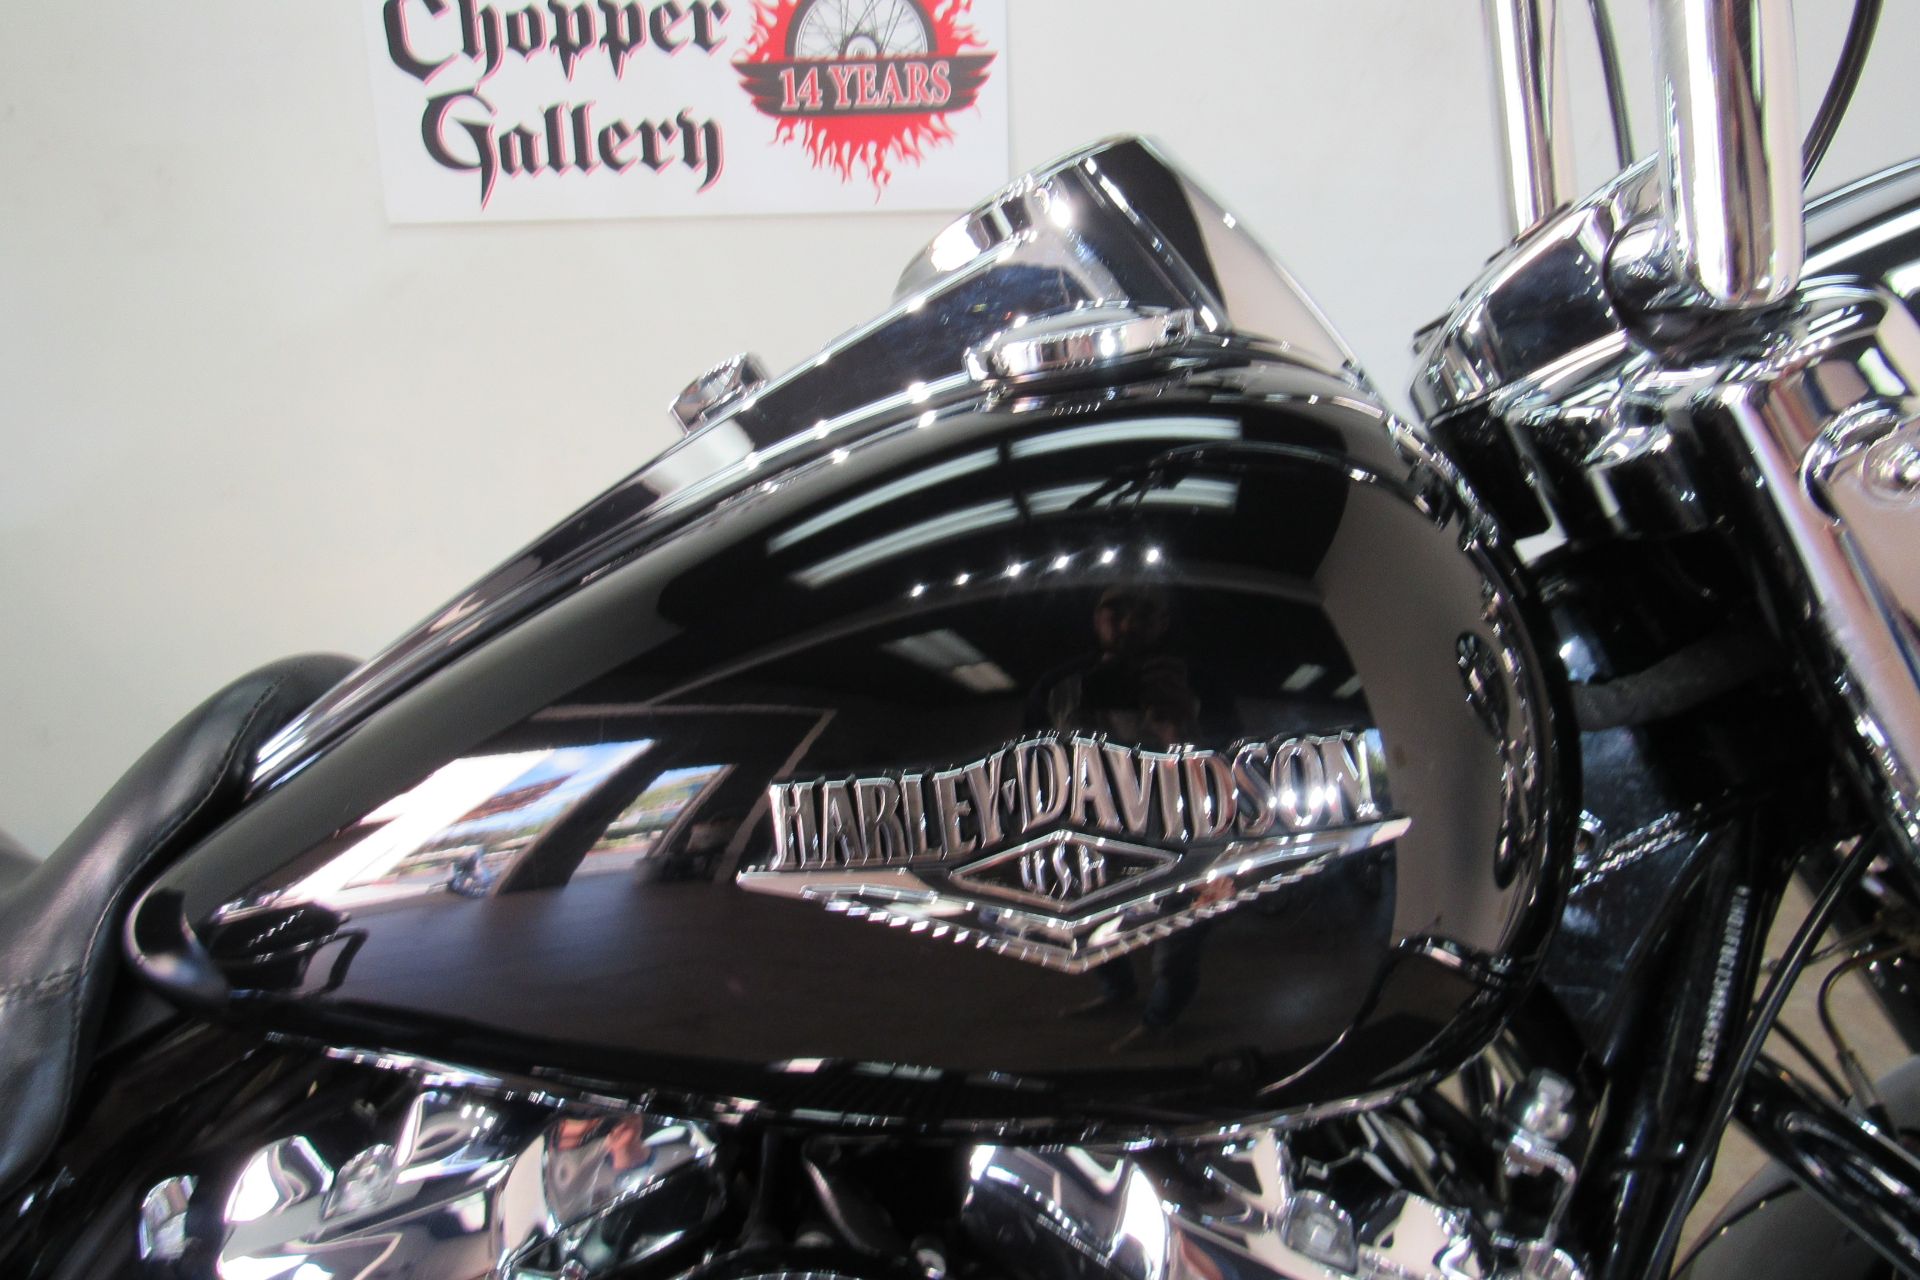 2019 Harley-Davidson Road King® in Temecula, California - Photo 7